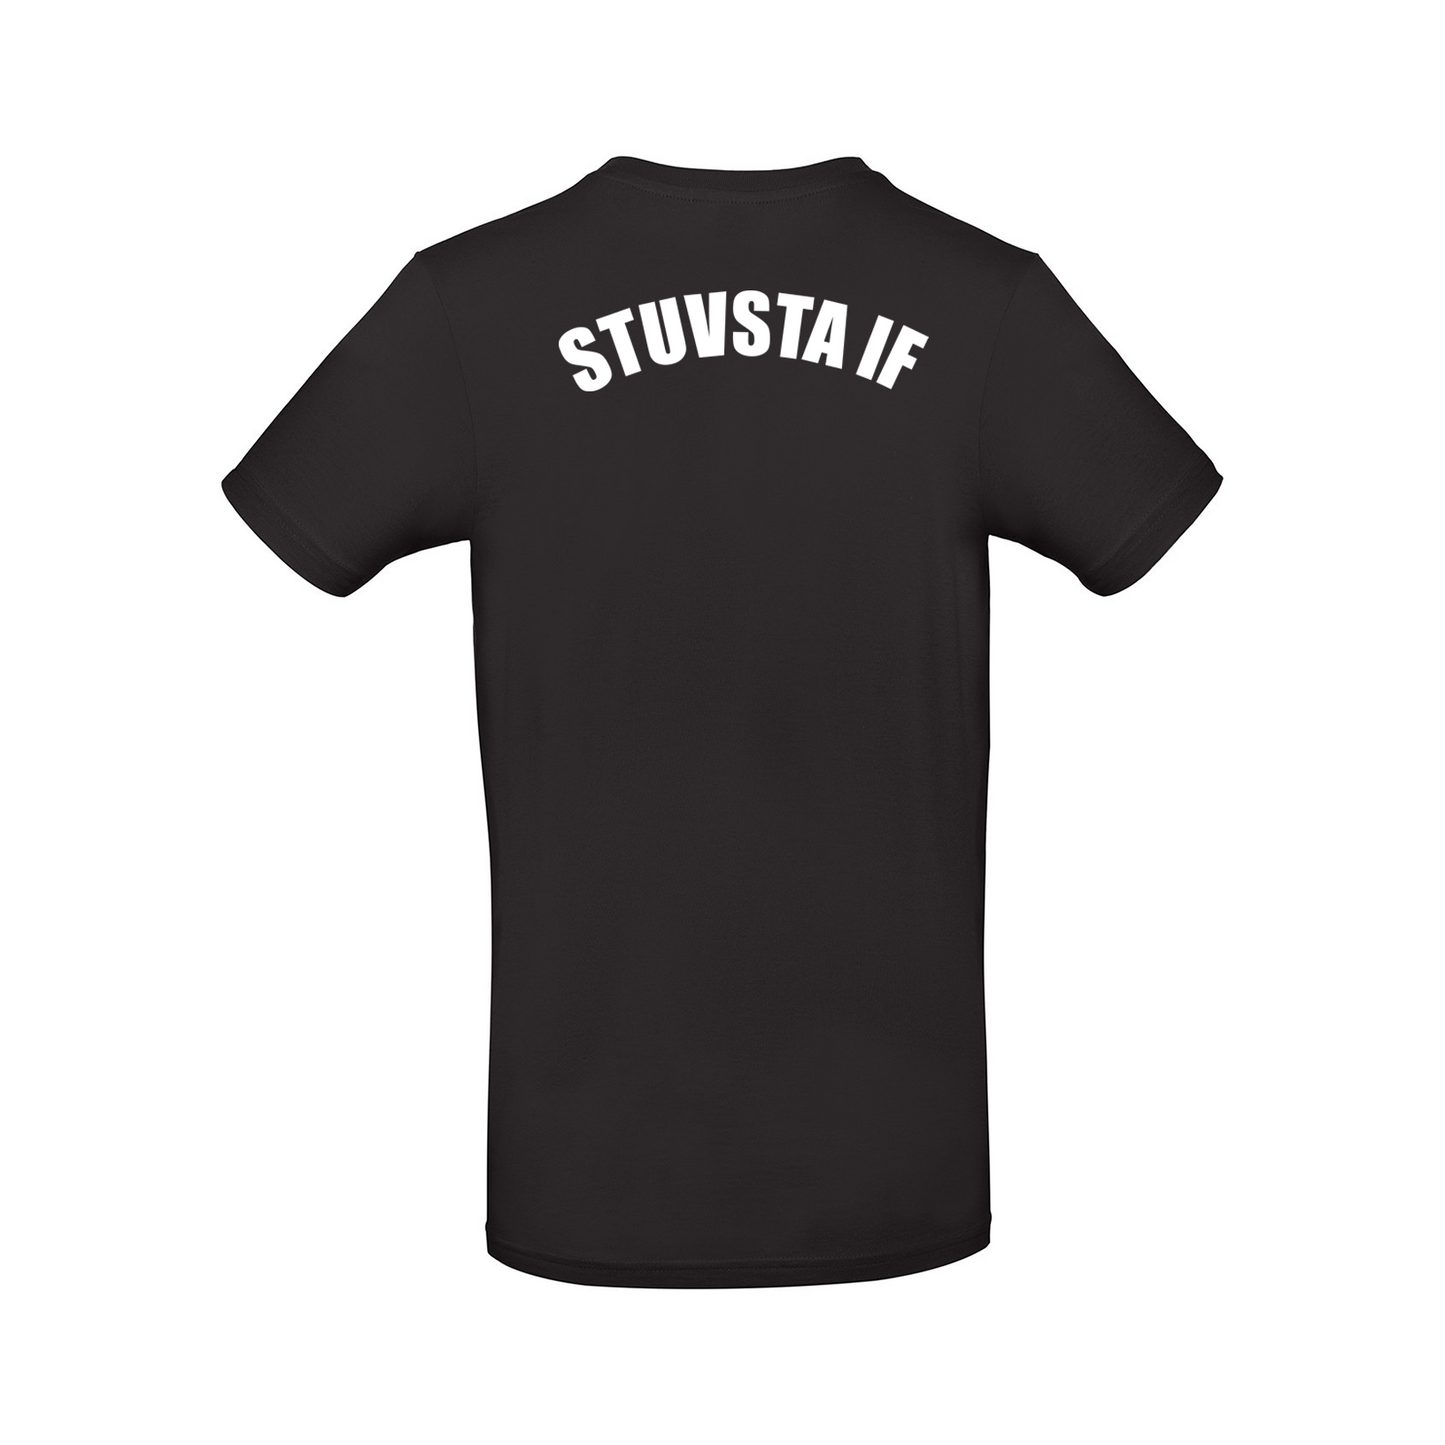 Stuvsta Club T-shirt